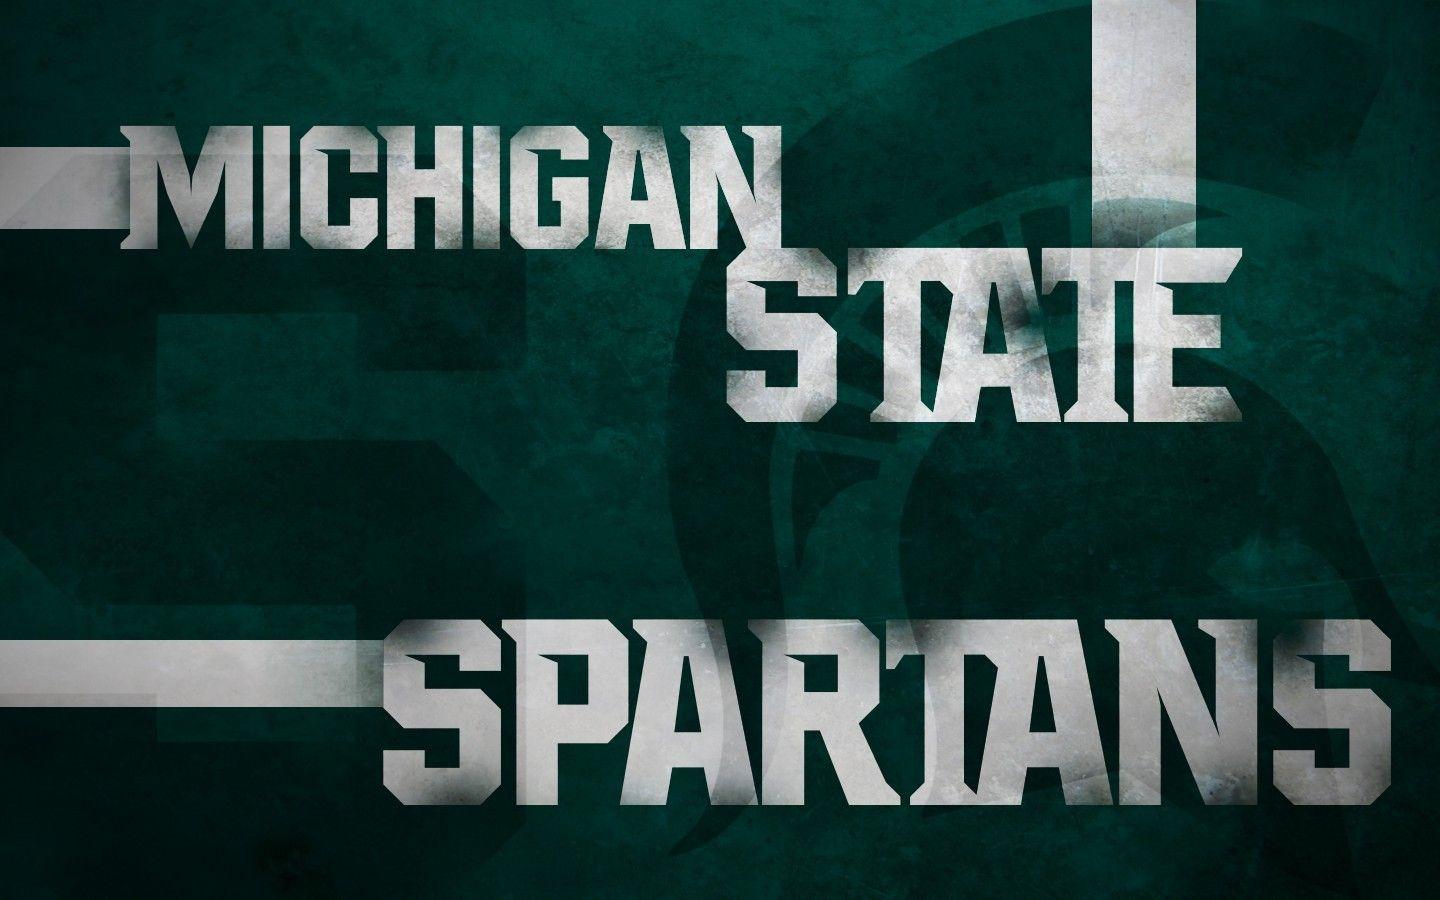 Michigan state spartans wallpaper. PC